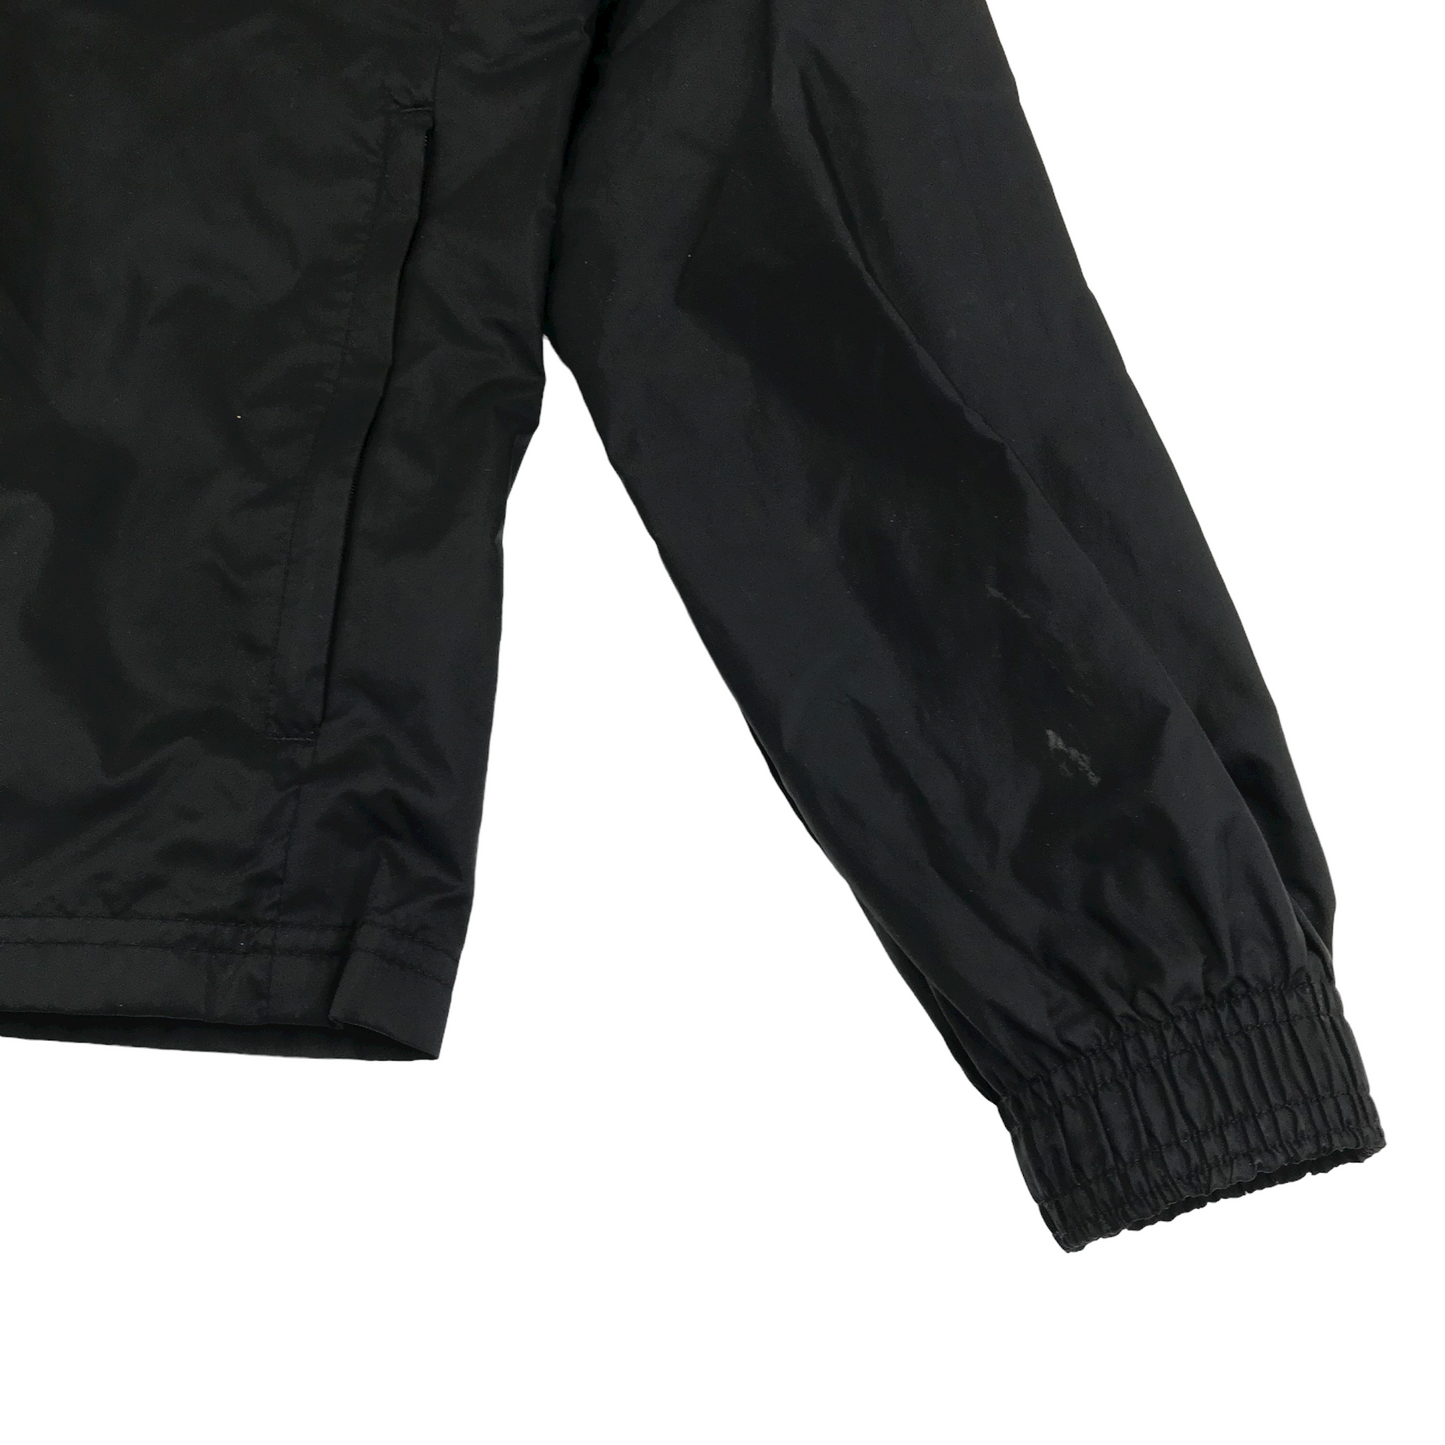 Adidas Black Light Sports Jacket Age 12-14